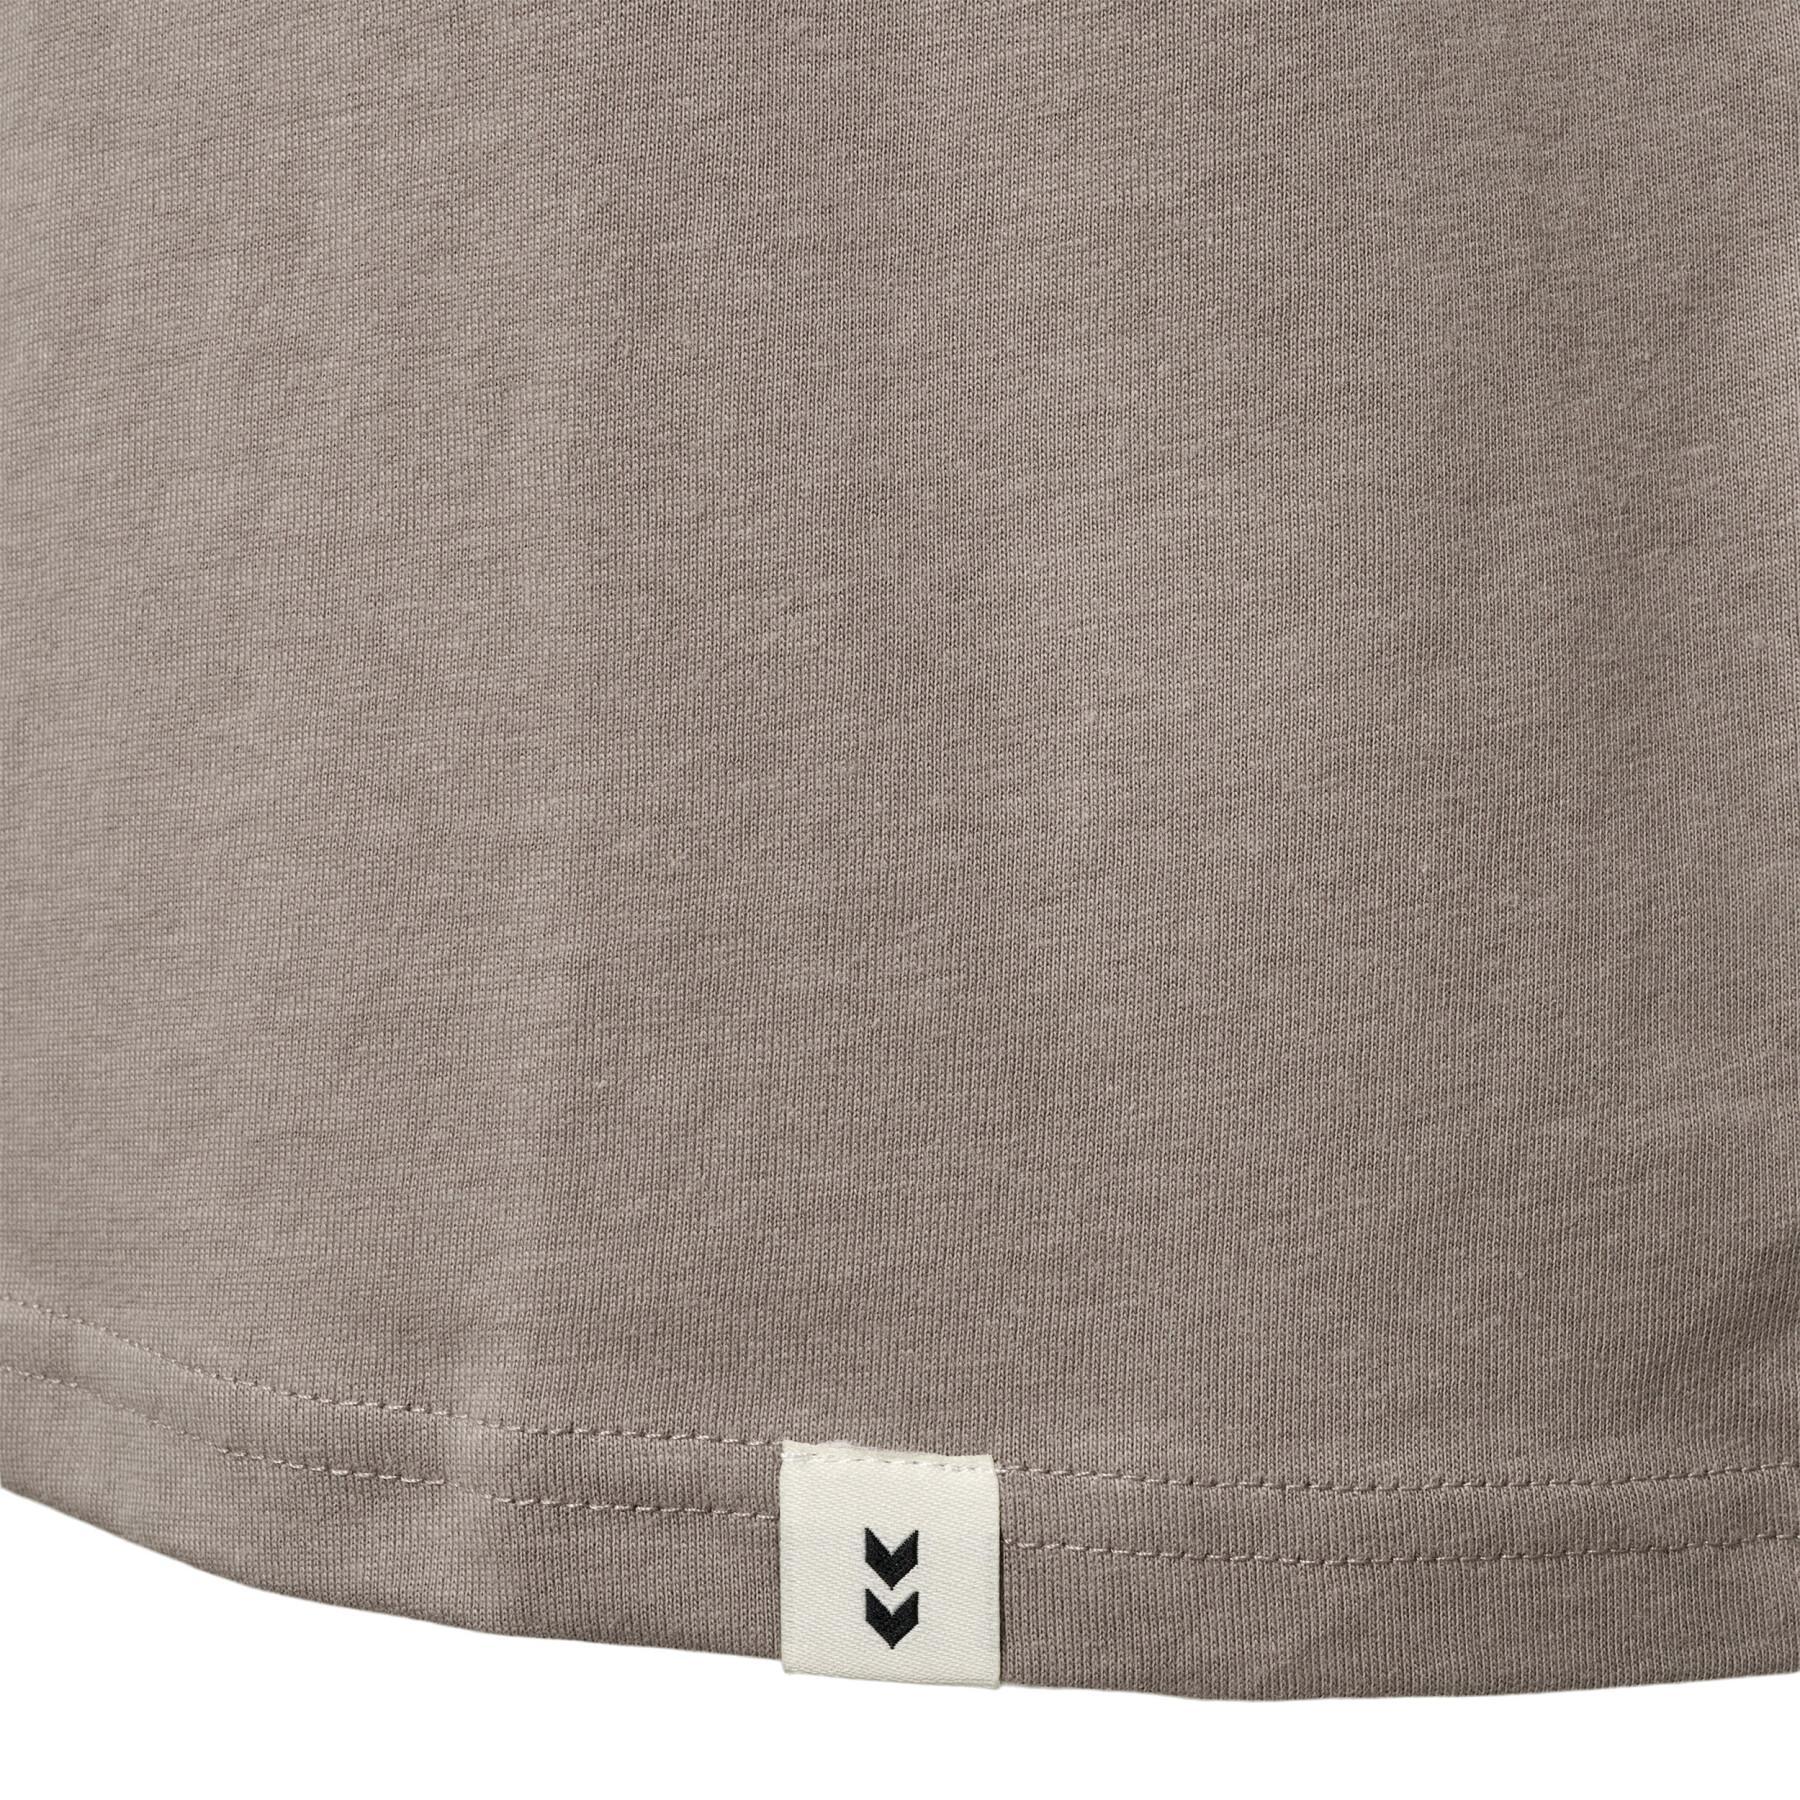 Visgraat T-shirt Hummel Legacy